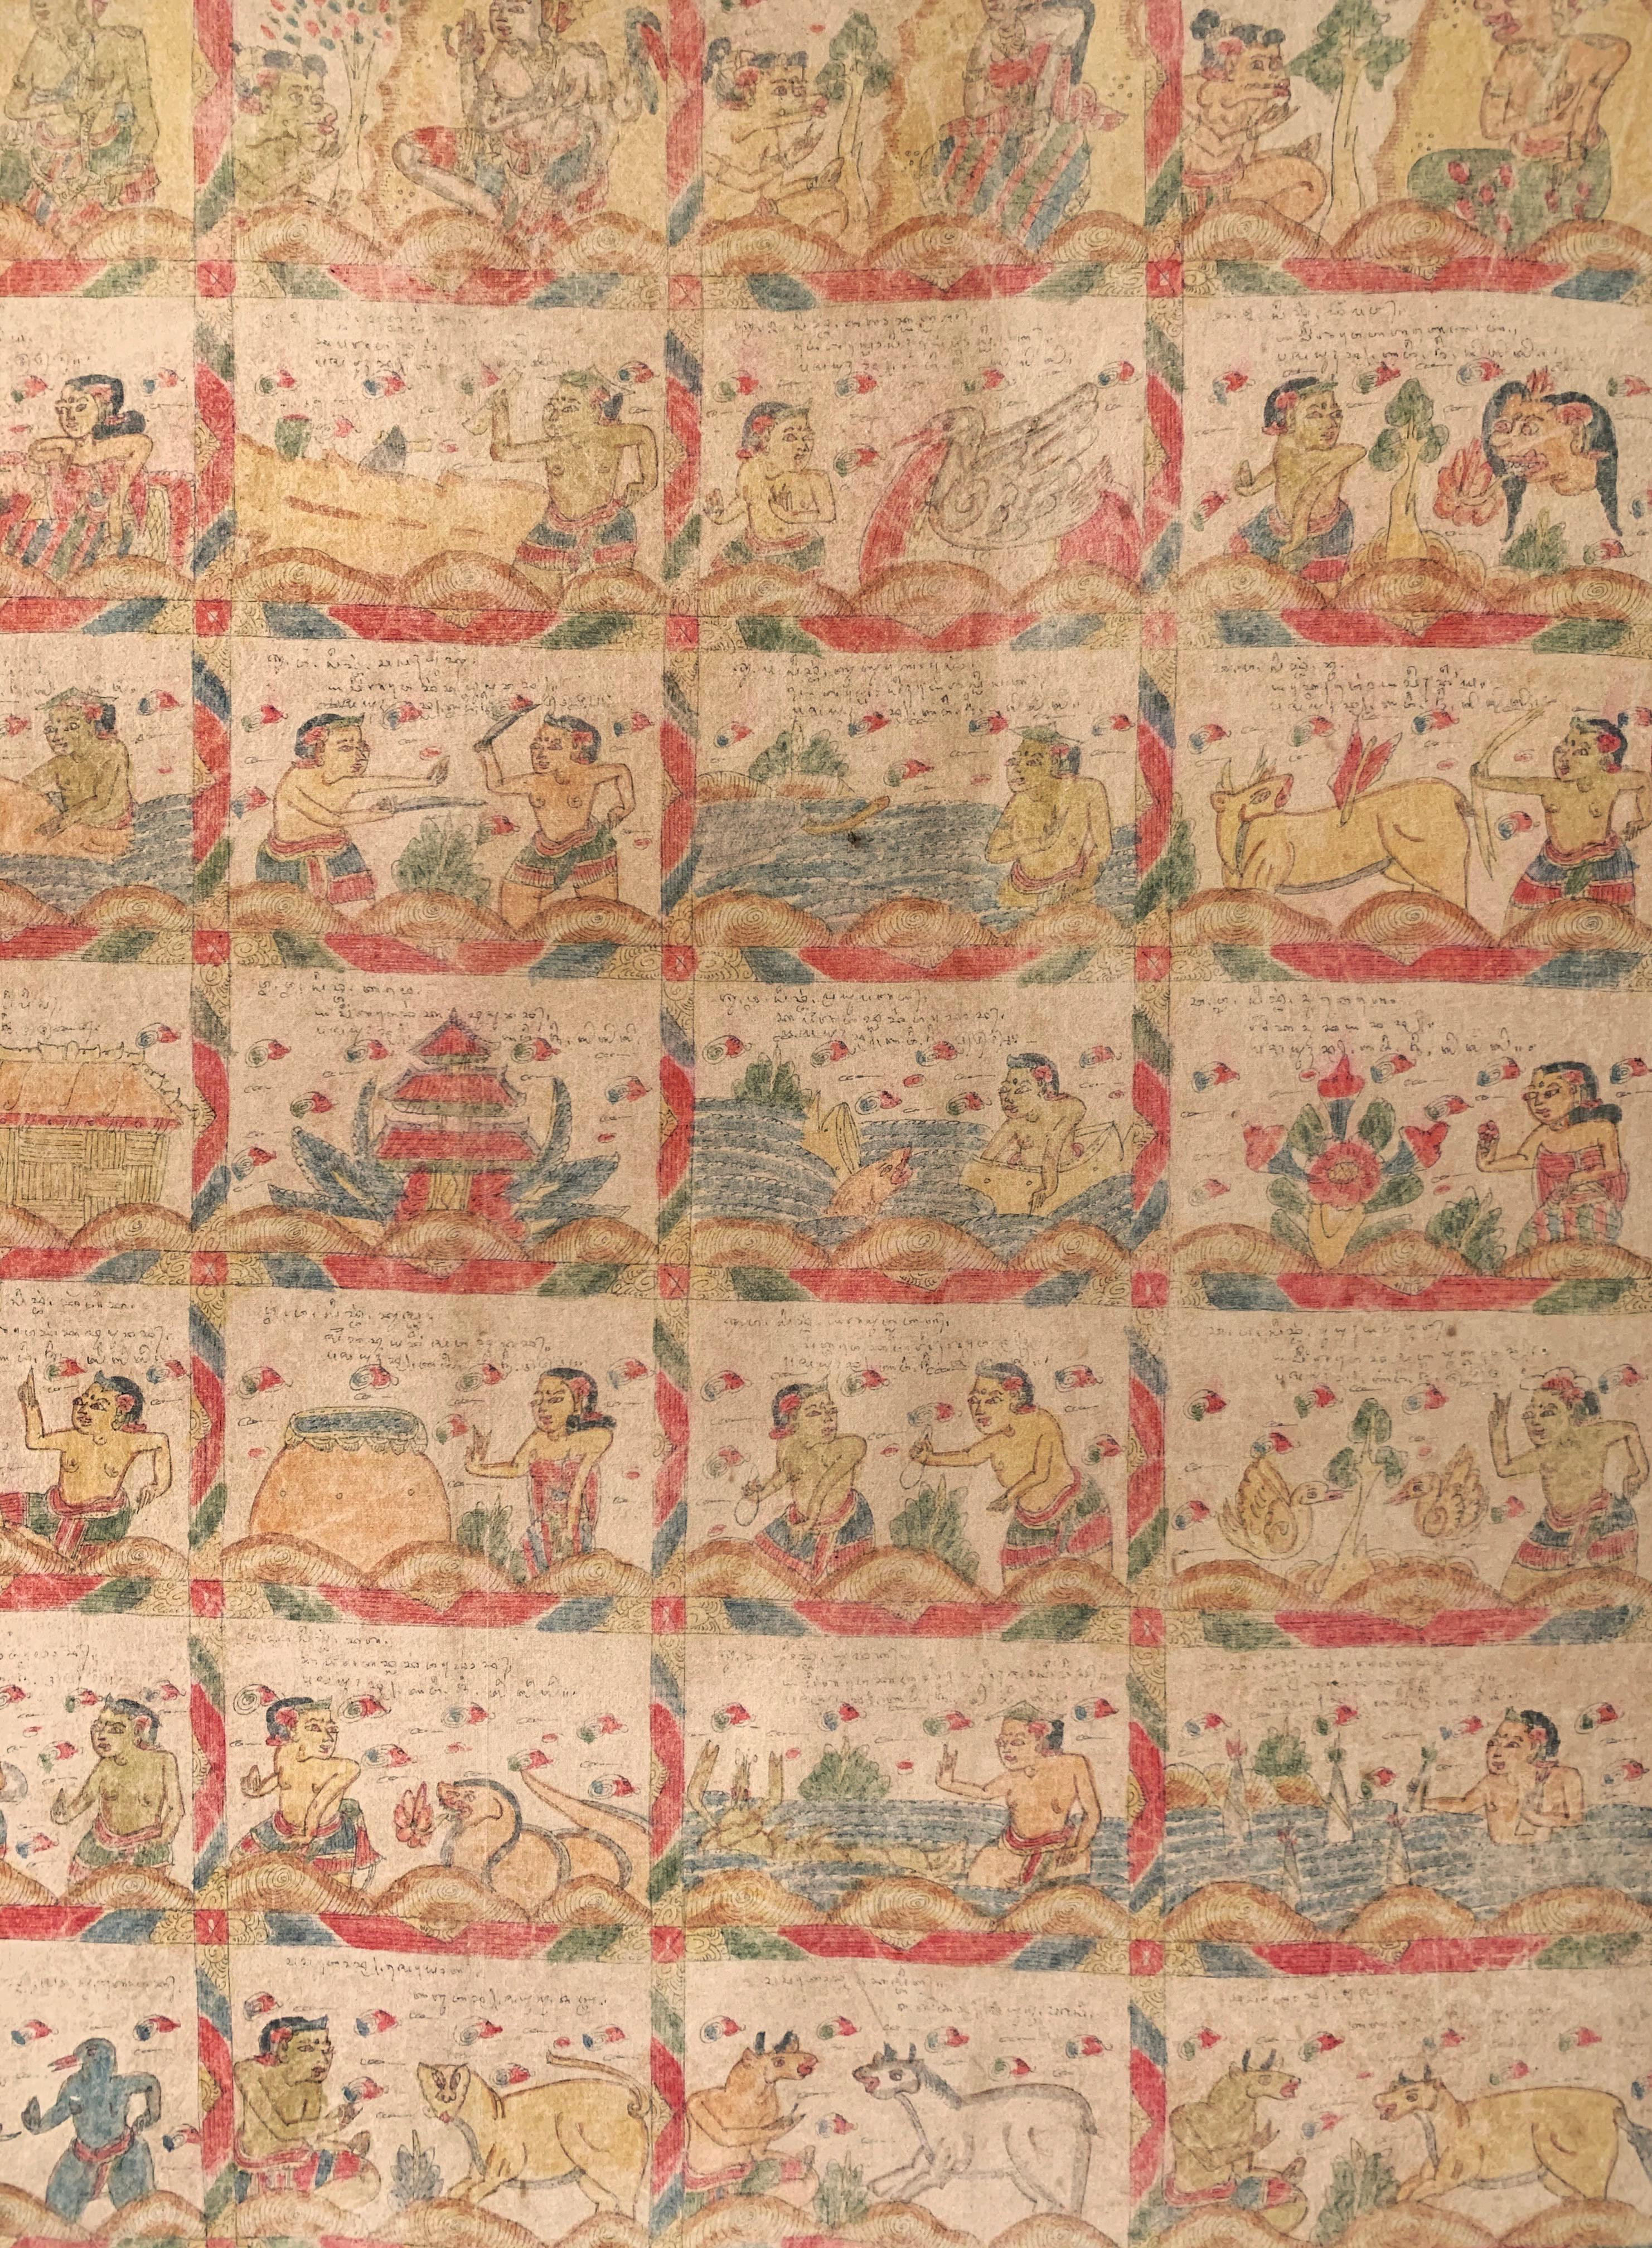 Folk Art Bali Hindu Textile Framed 'Kamasan' Painting, Indonesia, Early 20th Century